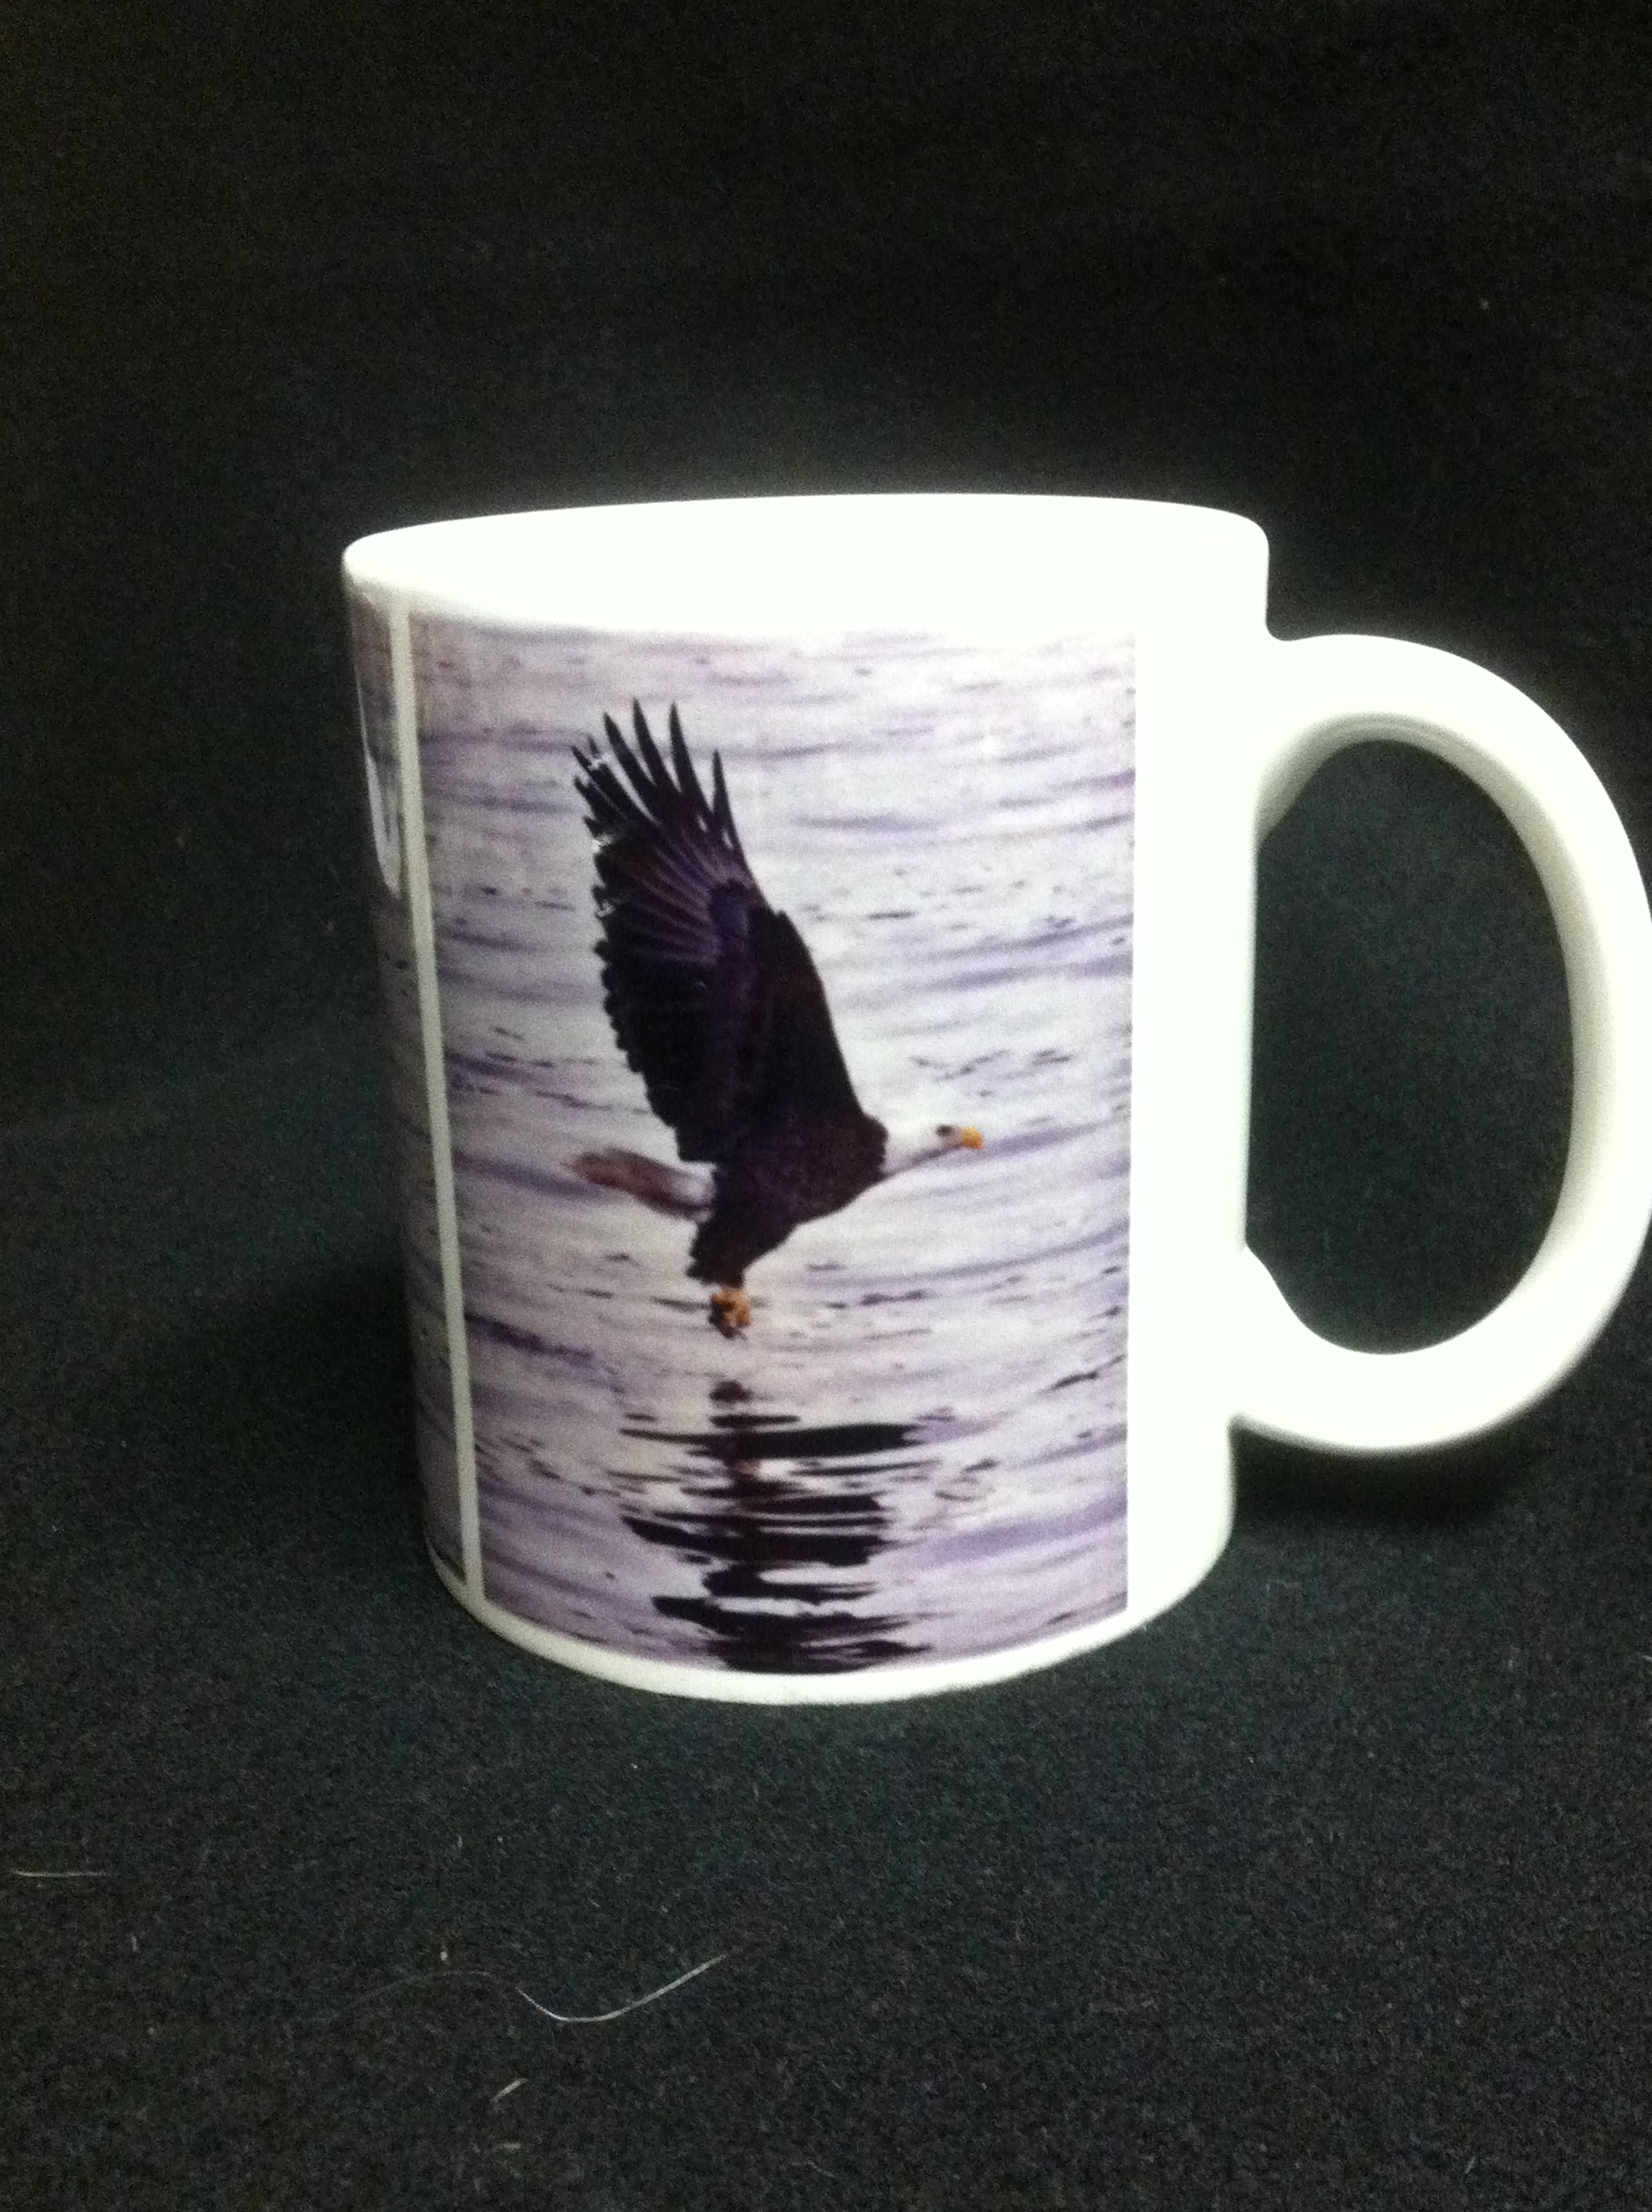 Eagle Mug #1 made with sublimation printing